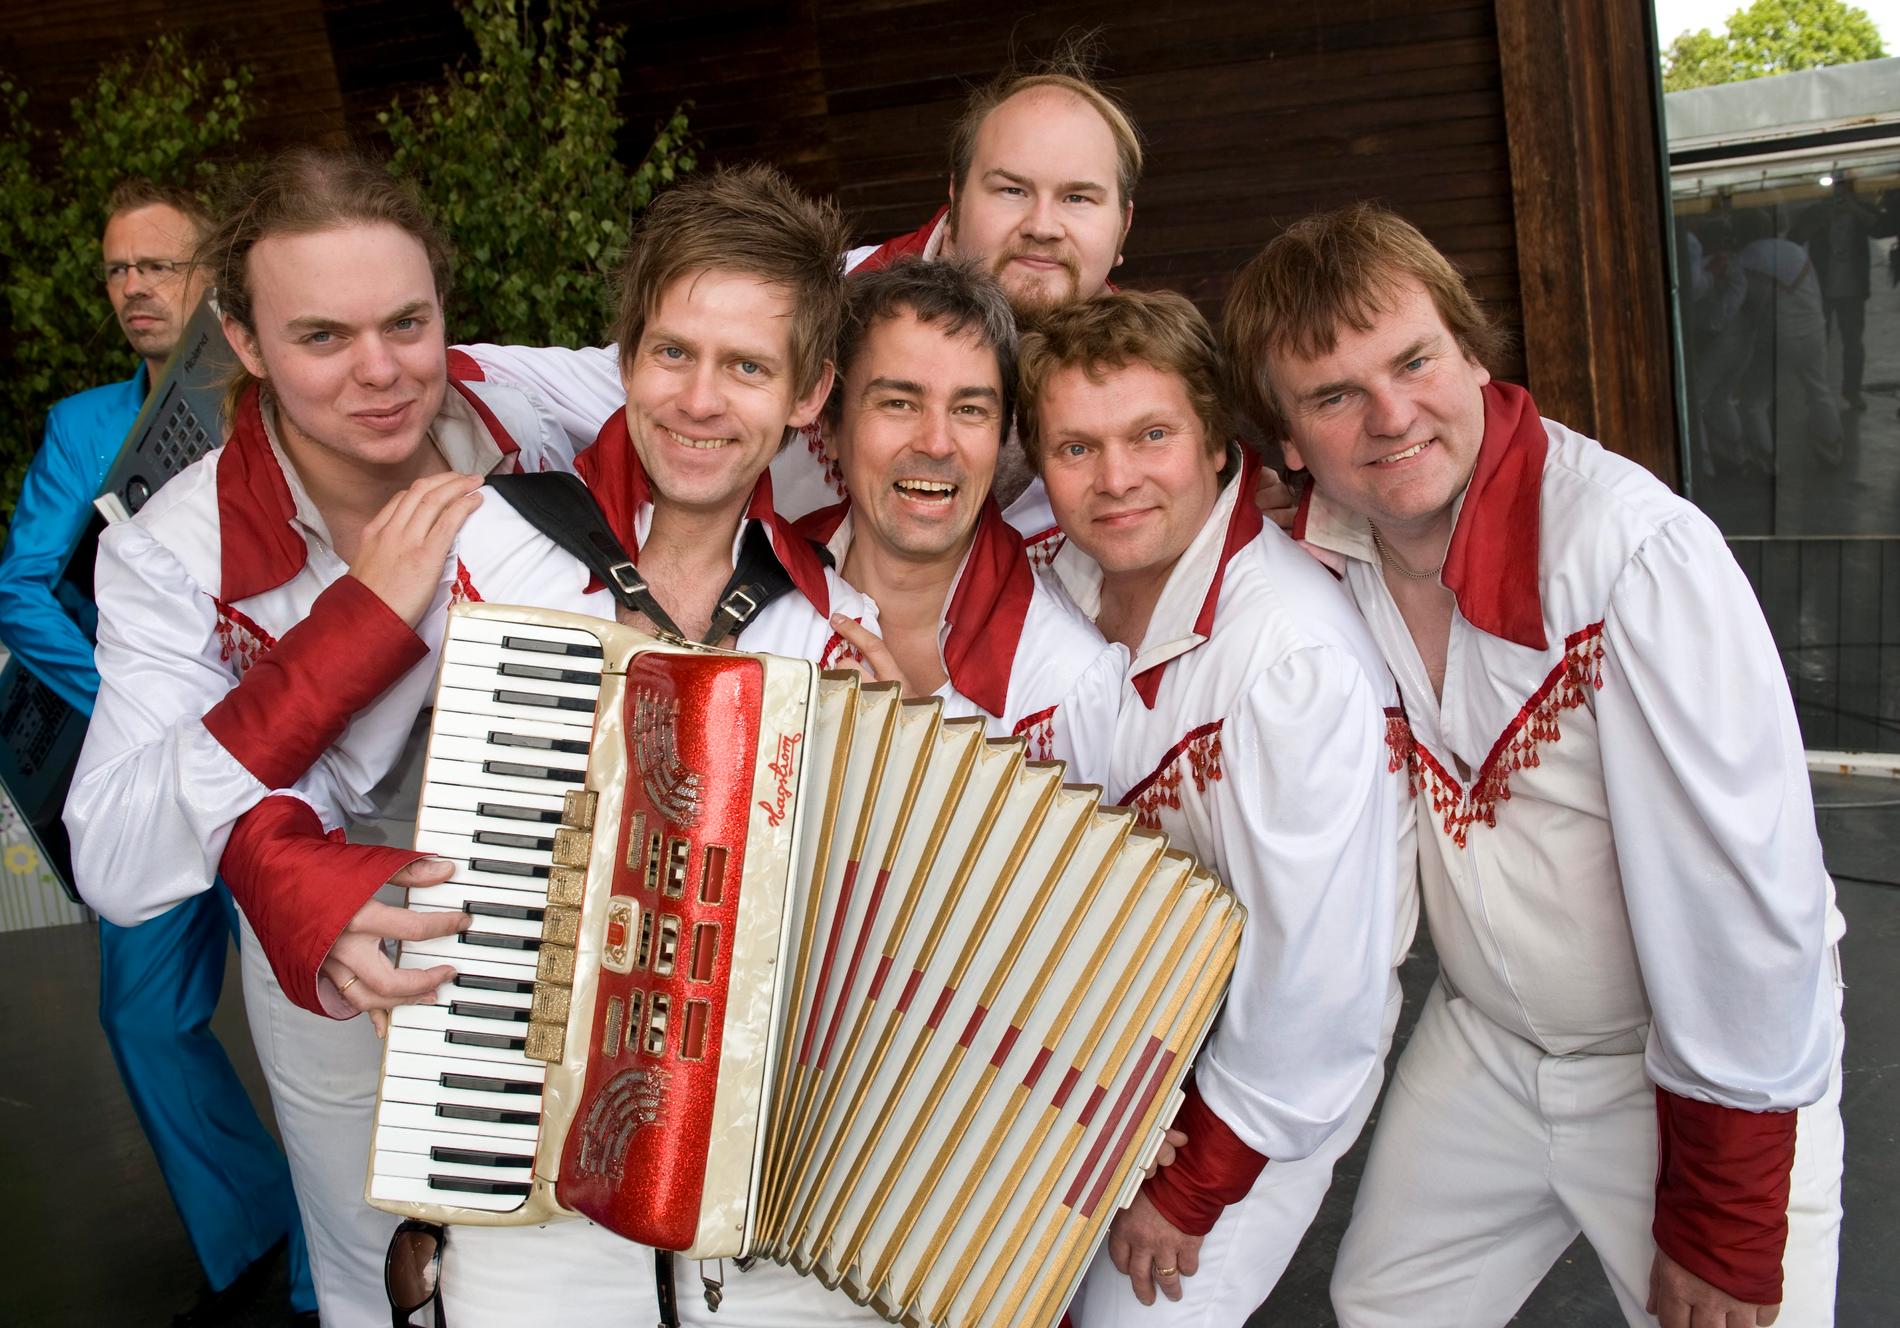 Dansbandet Larz-Kristerz, som slog igenom i dansbandkampen 2008, hade sett fram emot sin sommarturné. Arkivbild.